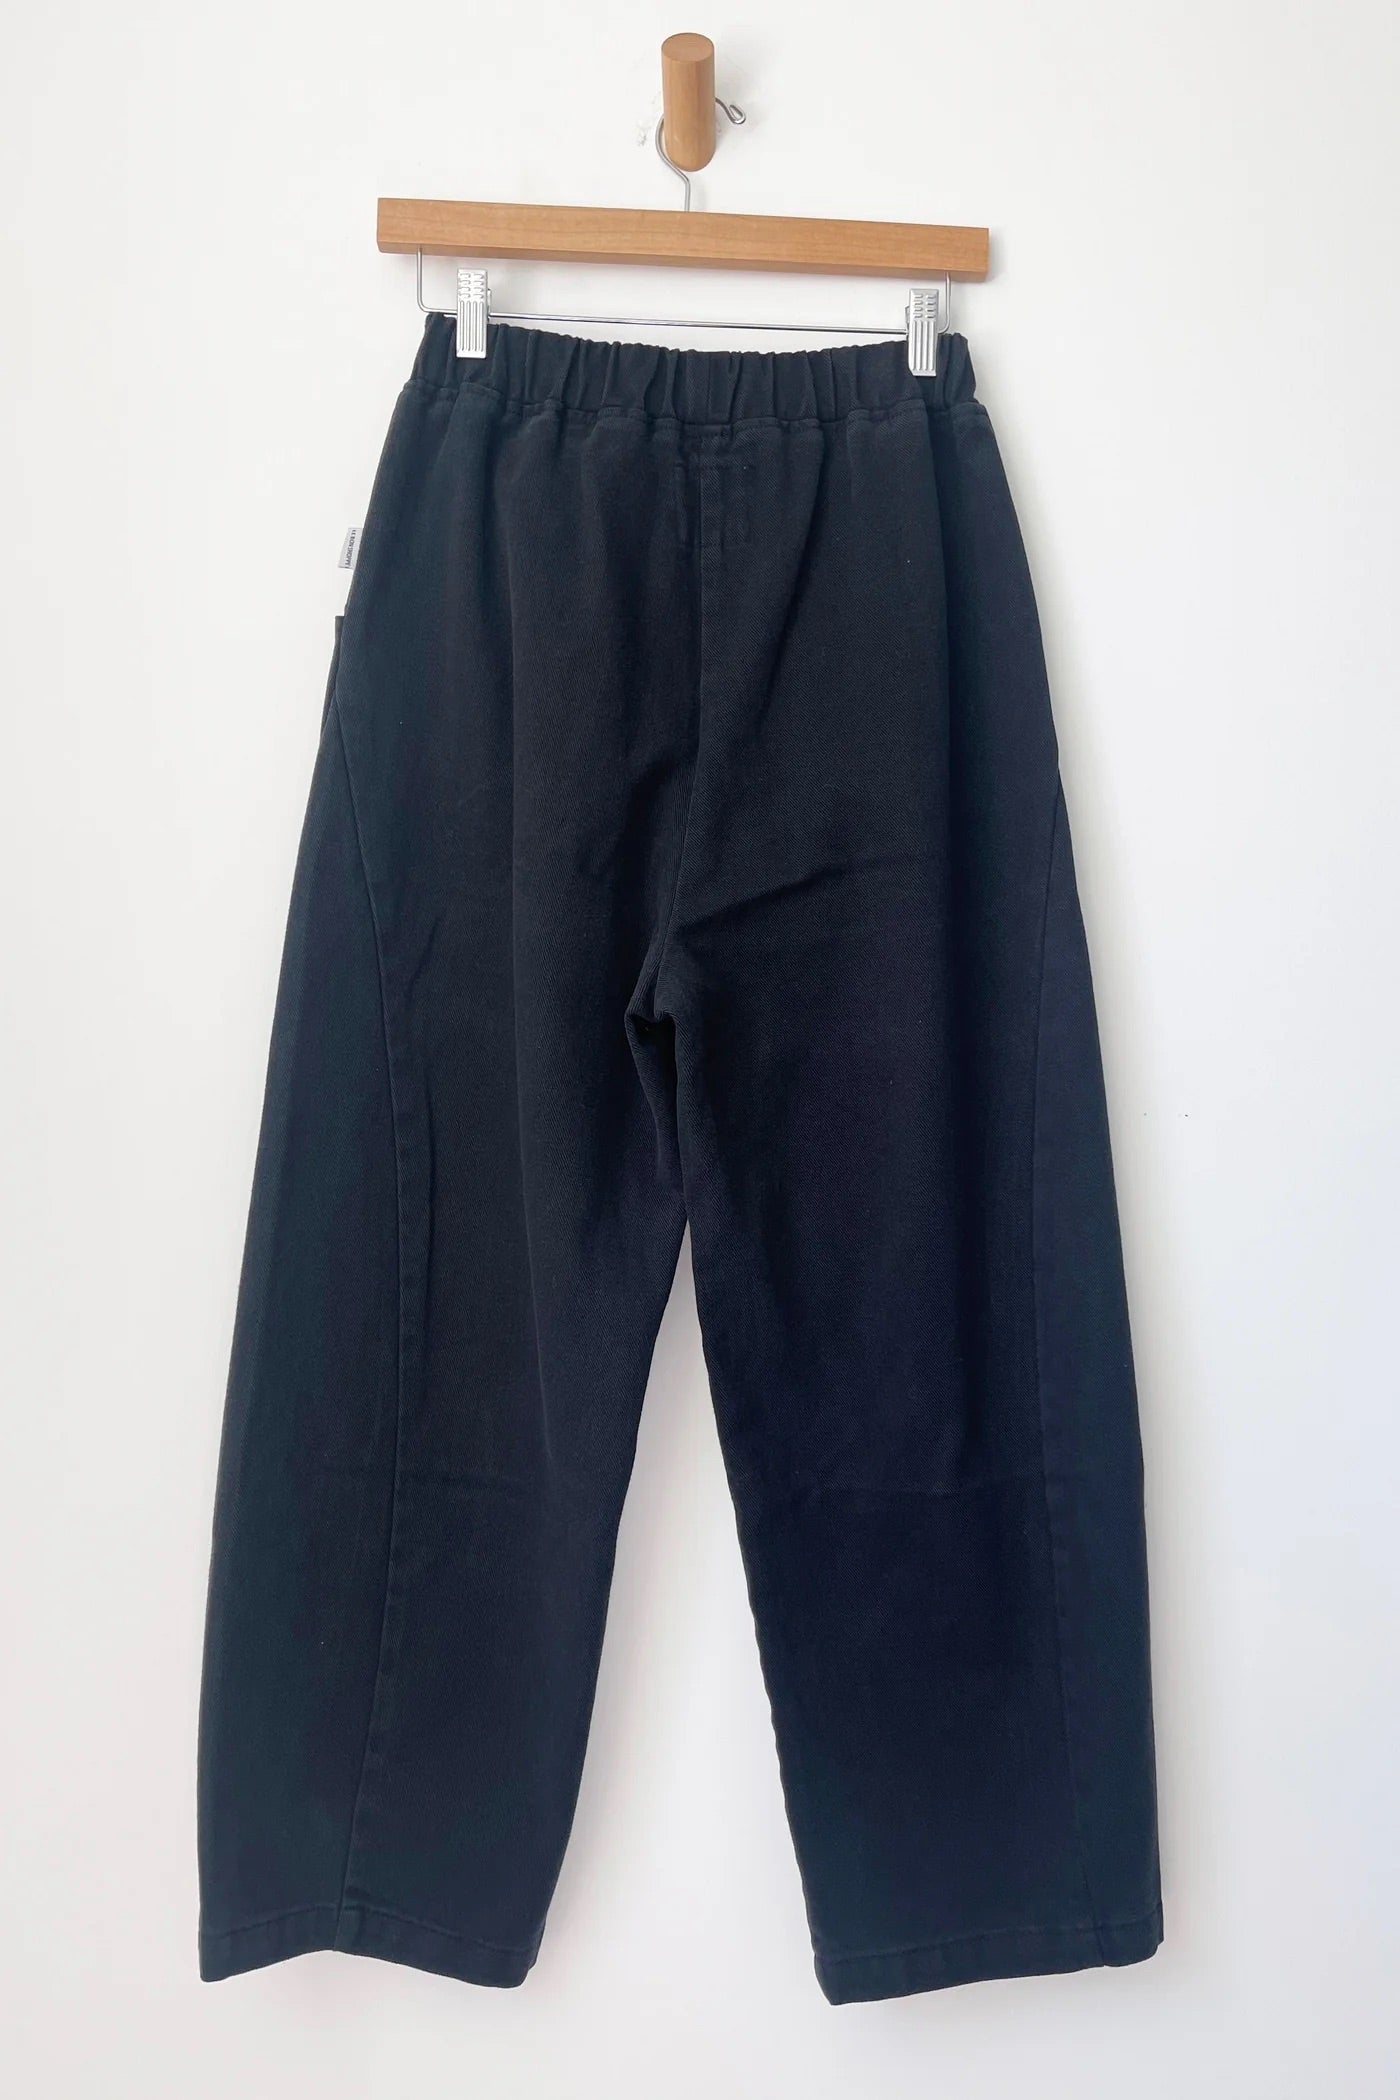 Le Bon Shoppe | Arc Pants - Black